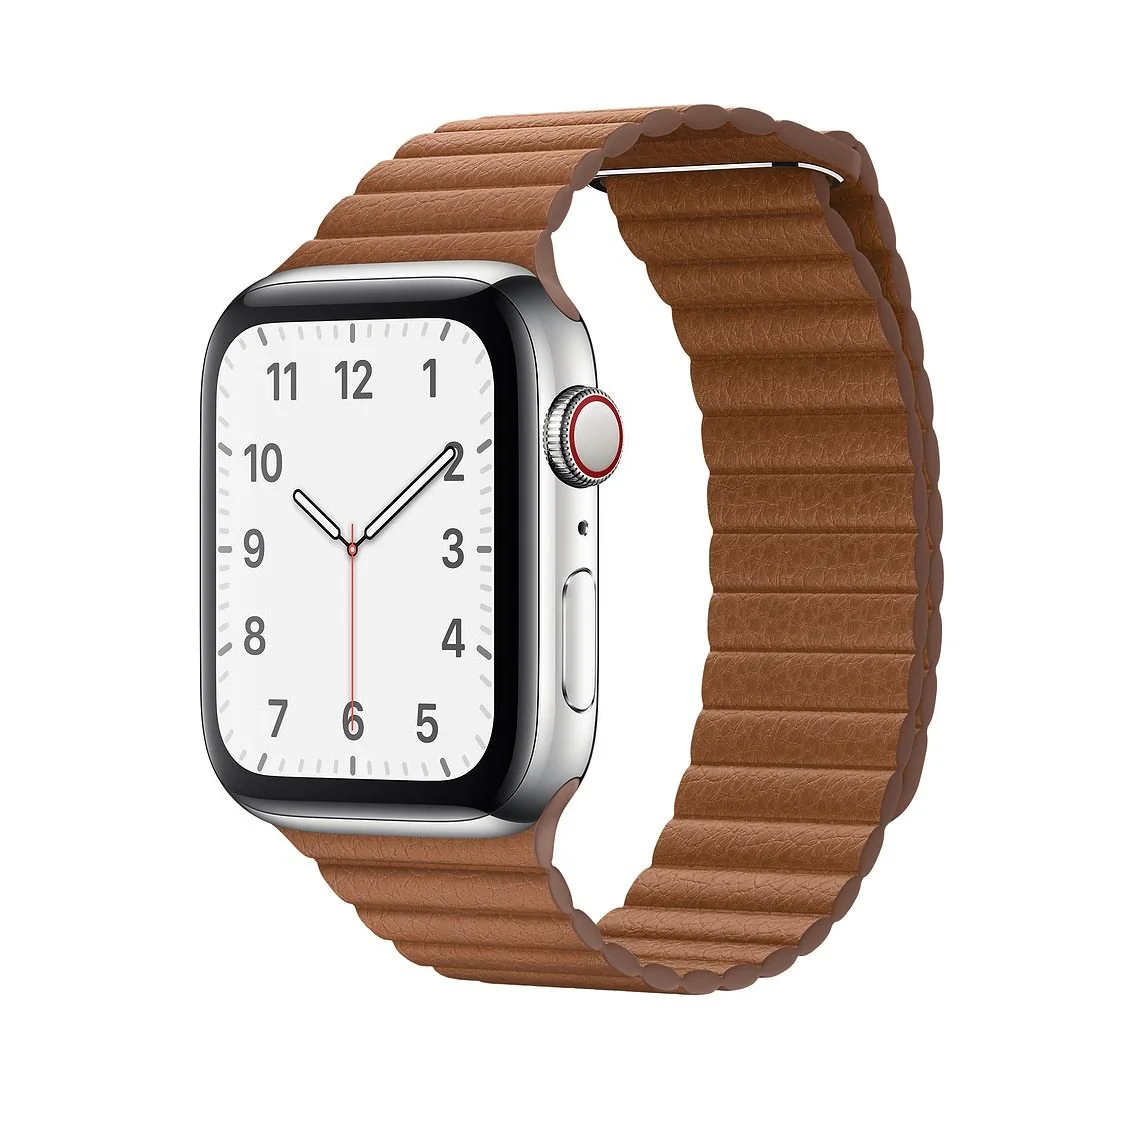 Řemínek iMore Leather Loop Apple Watch Series 3/2/1 (42mm) - Sedlově hnědý